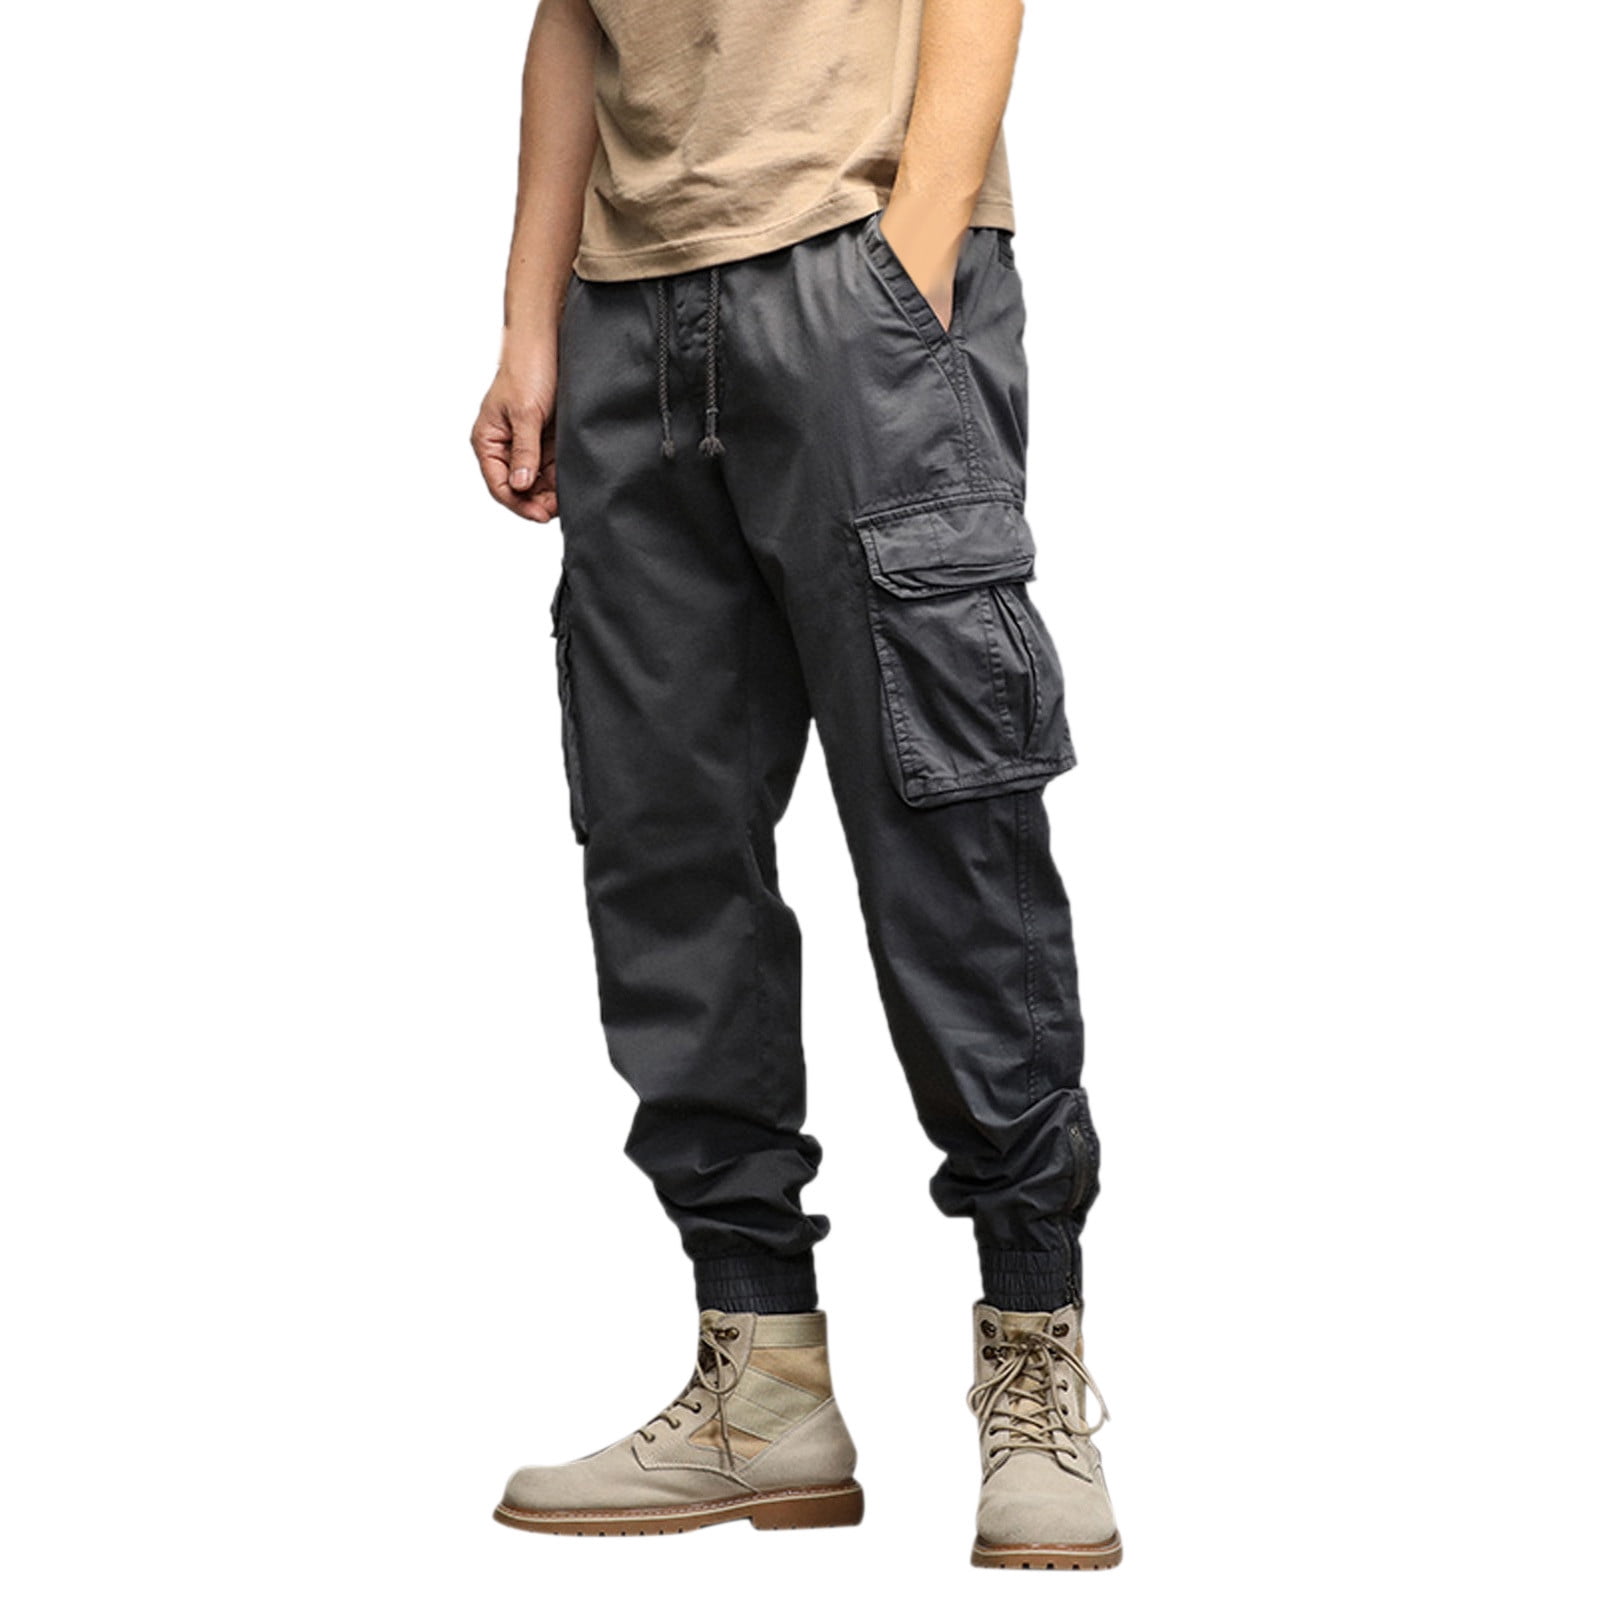 AdBFJAF Cargo Pants for Men Joggers Big and Tall Mens Fashion Loose ...